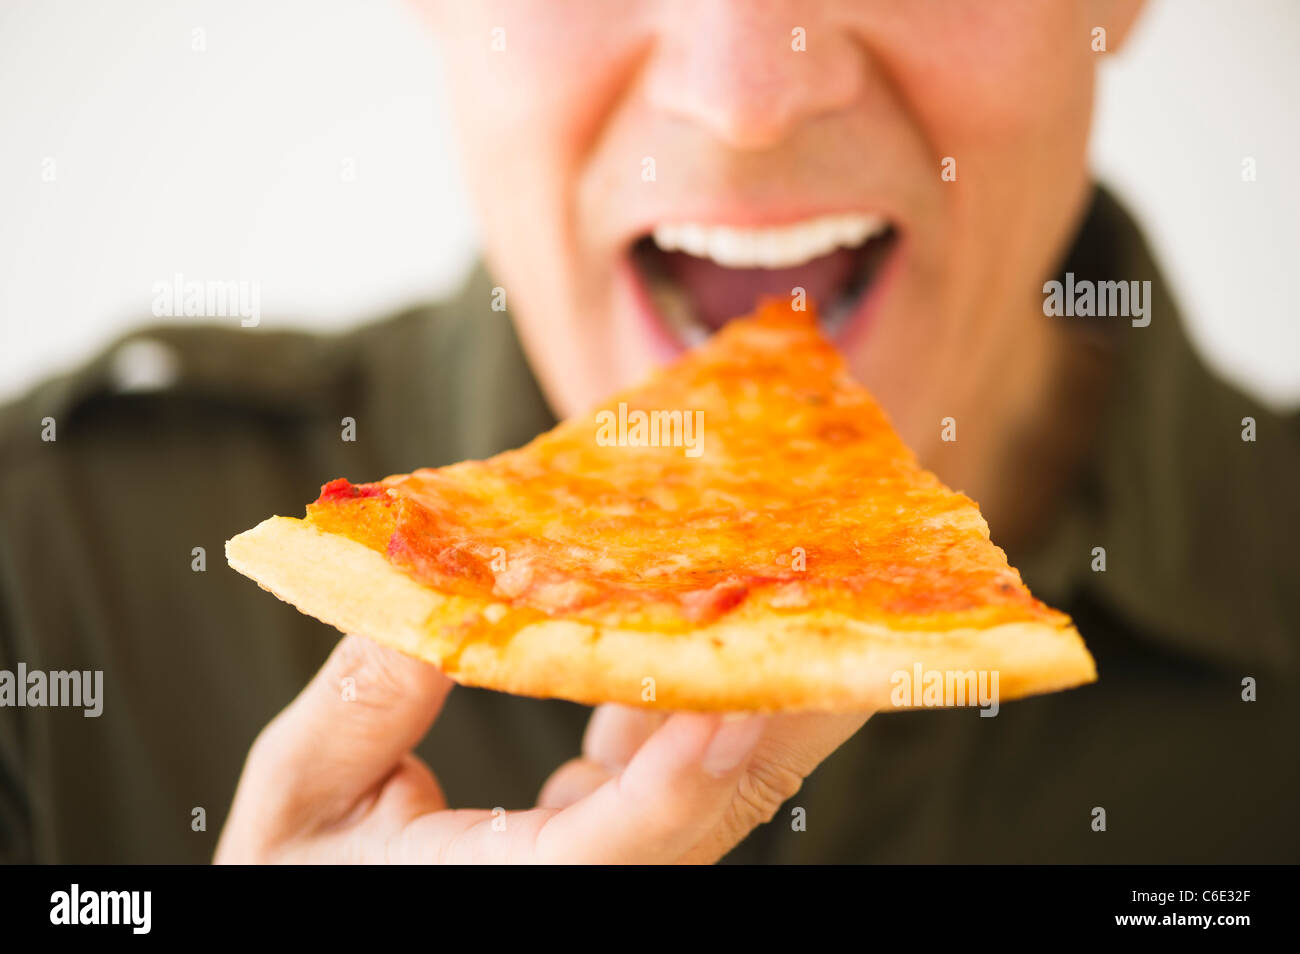 Man eating pizza Stock Photo